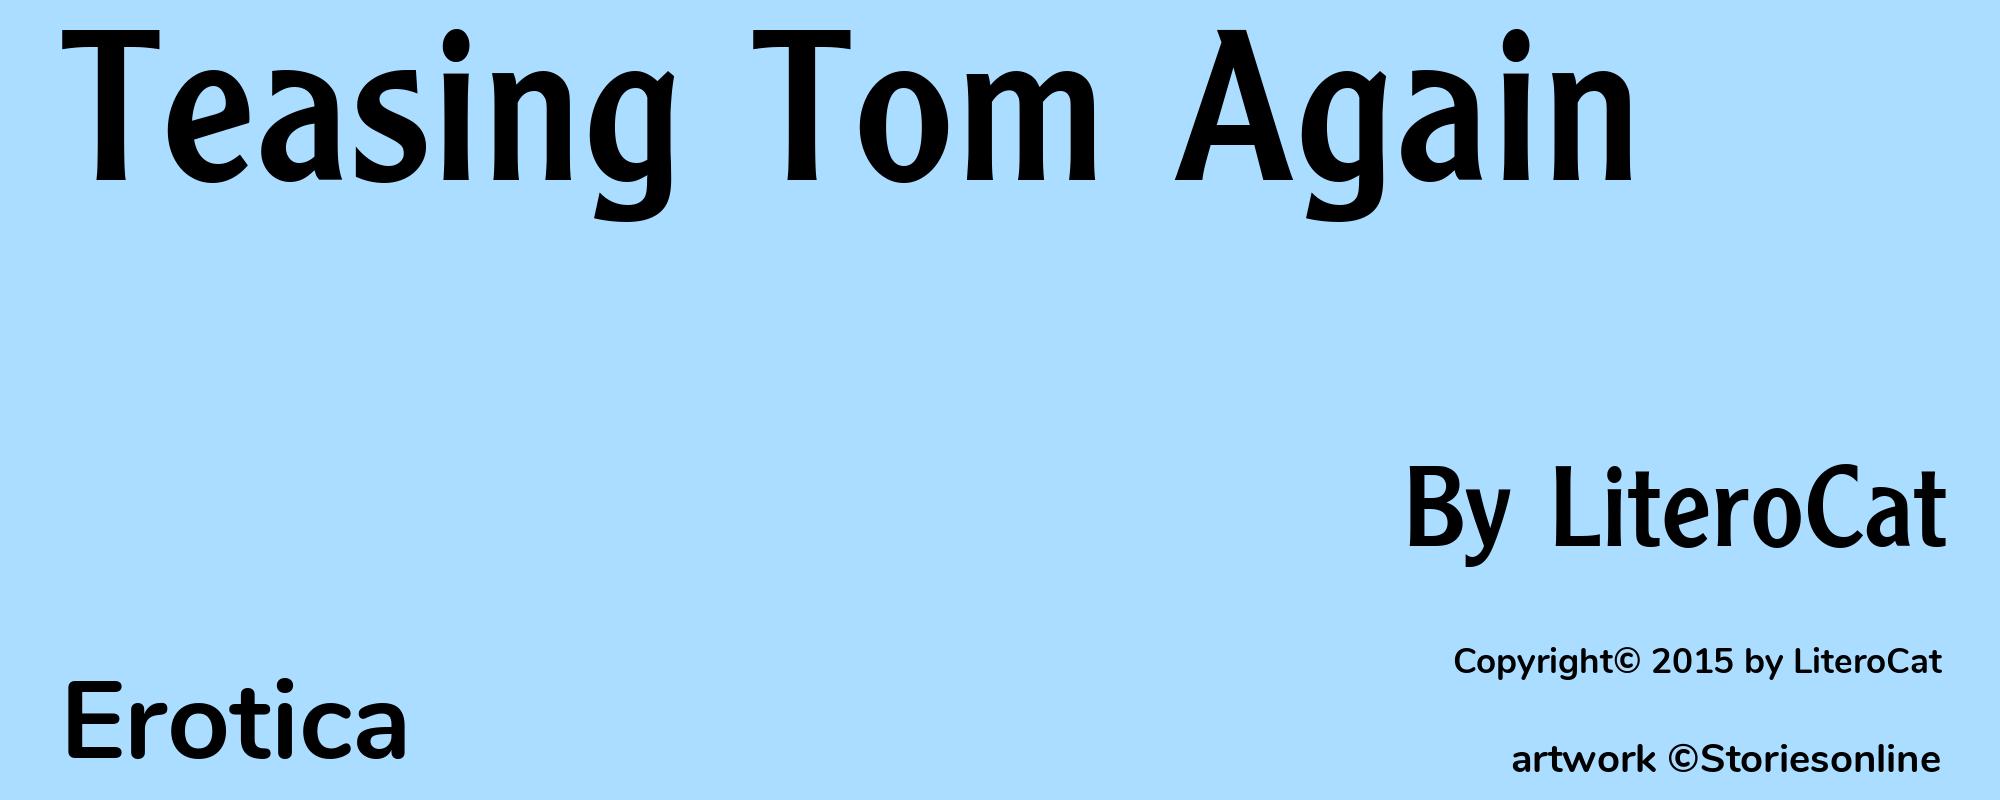 Teasing Tom Again - Cover